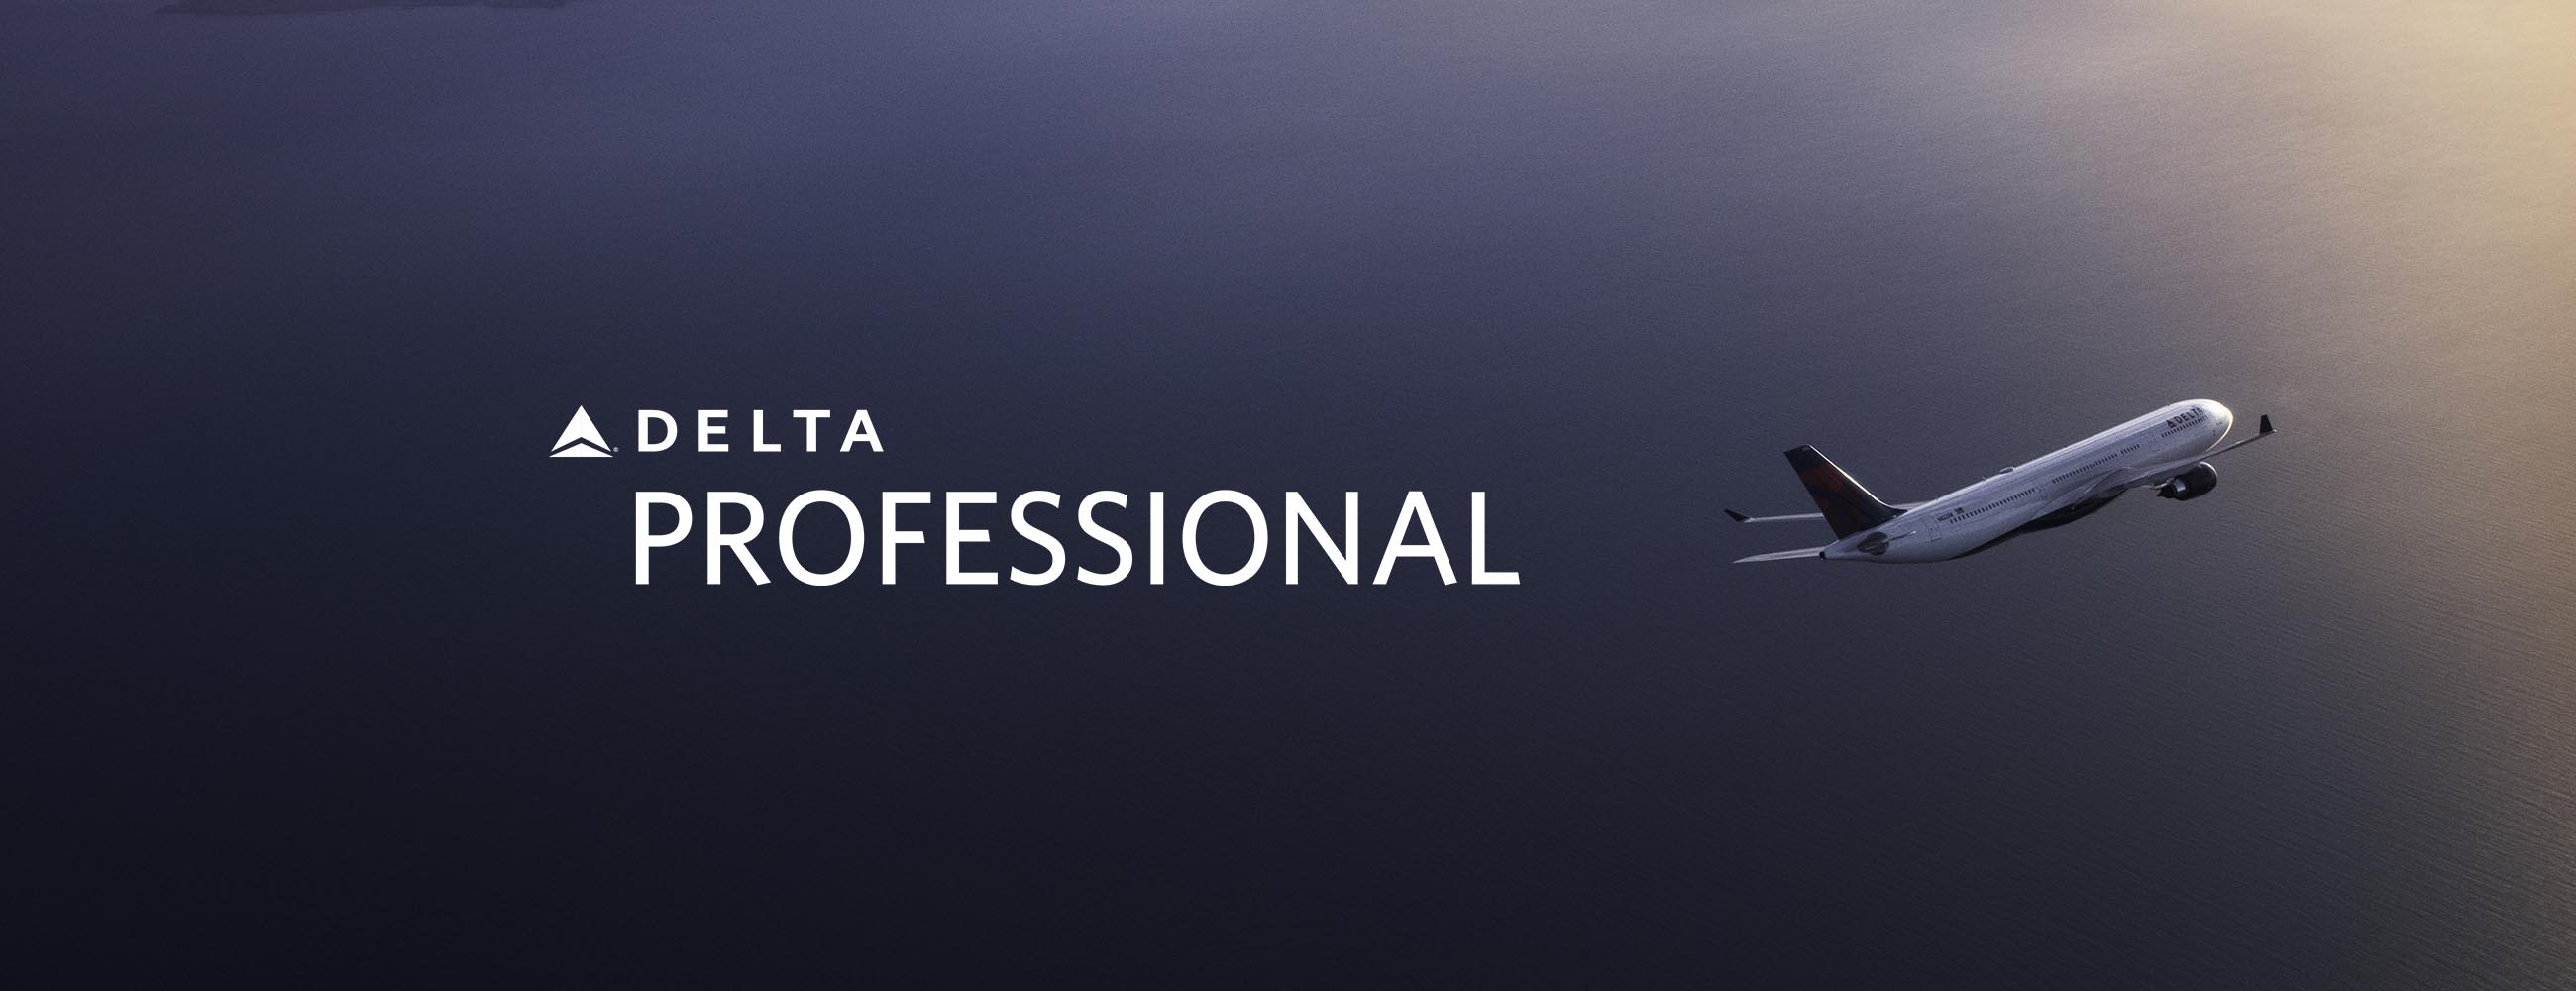 delta travel professional